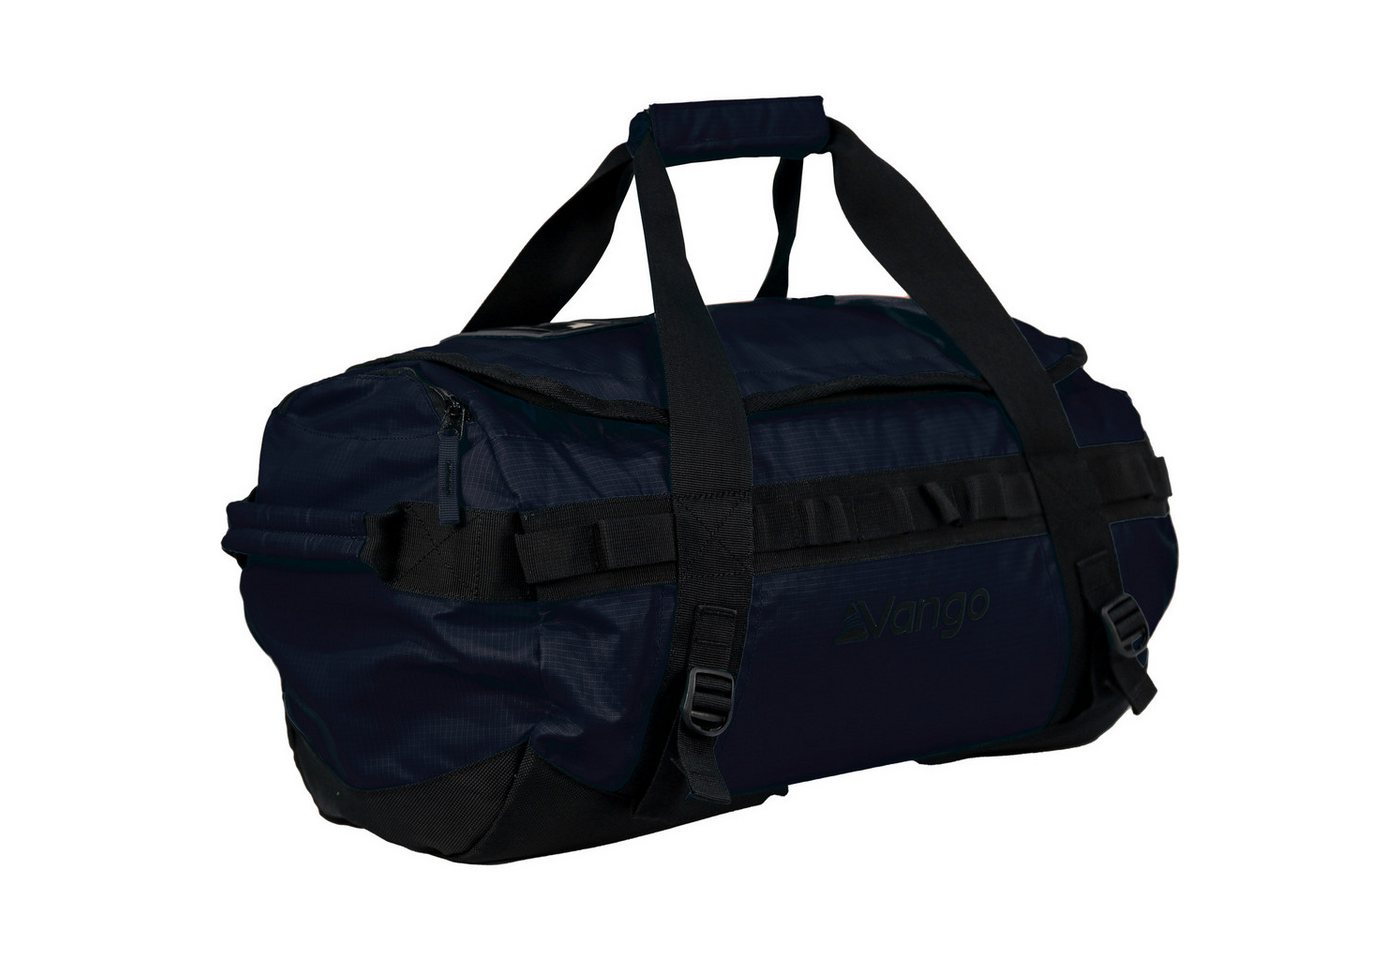 Vango Trekkingrucksack Reisetasche Cargo 40 Duffle Bag Camping, Rucksack Transport Tasche Tragbar von Vango